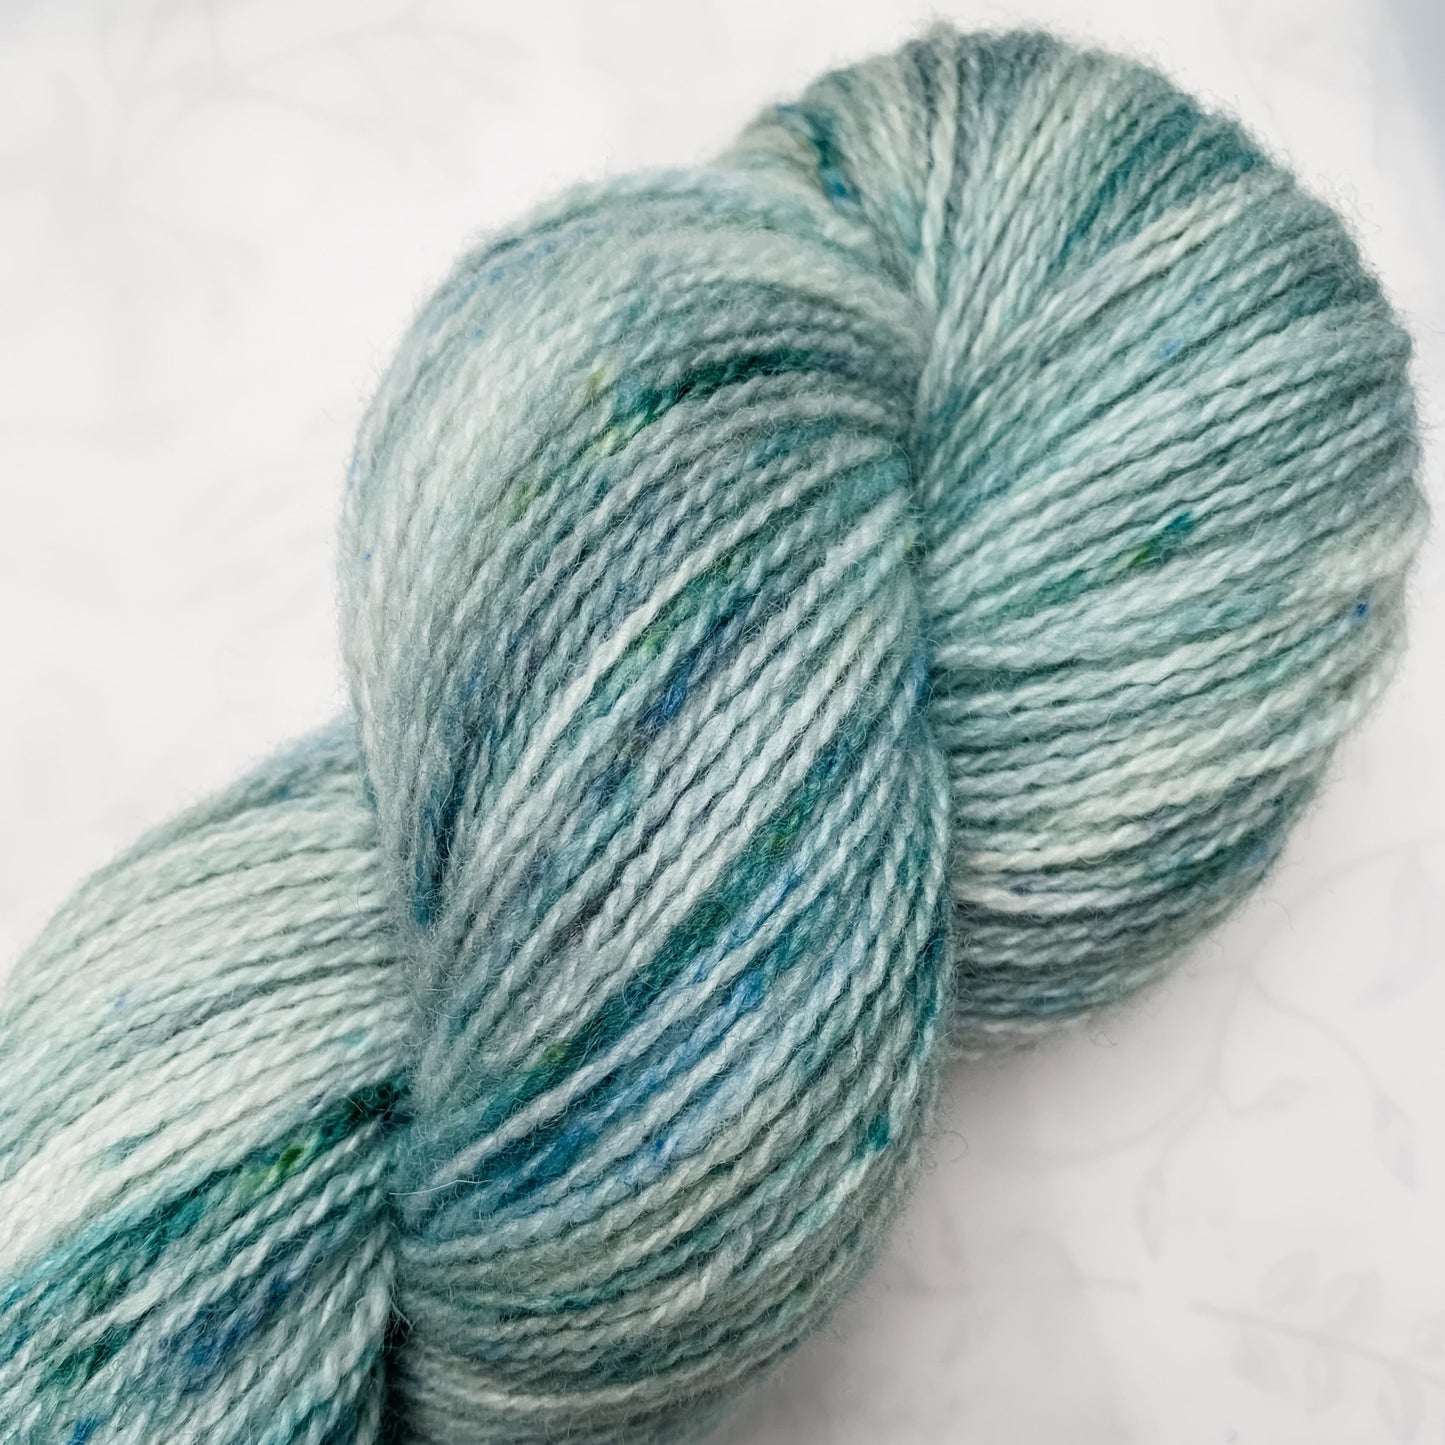 Monsoon - Trollfjord sock - Hand Dyed Yarn - Variegated Yarn